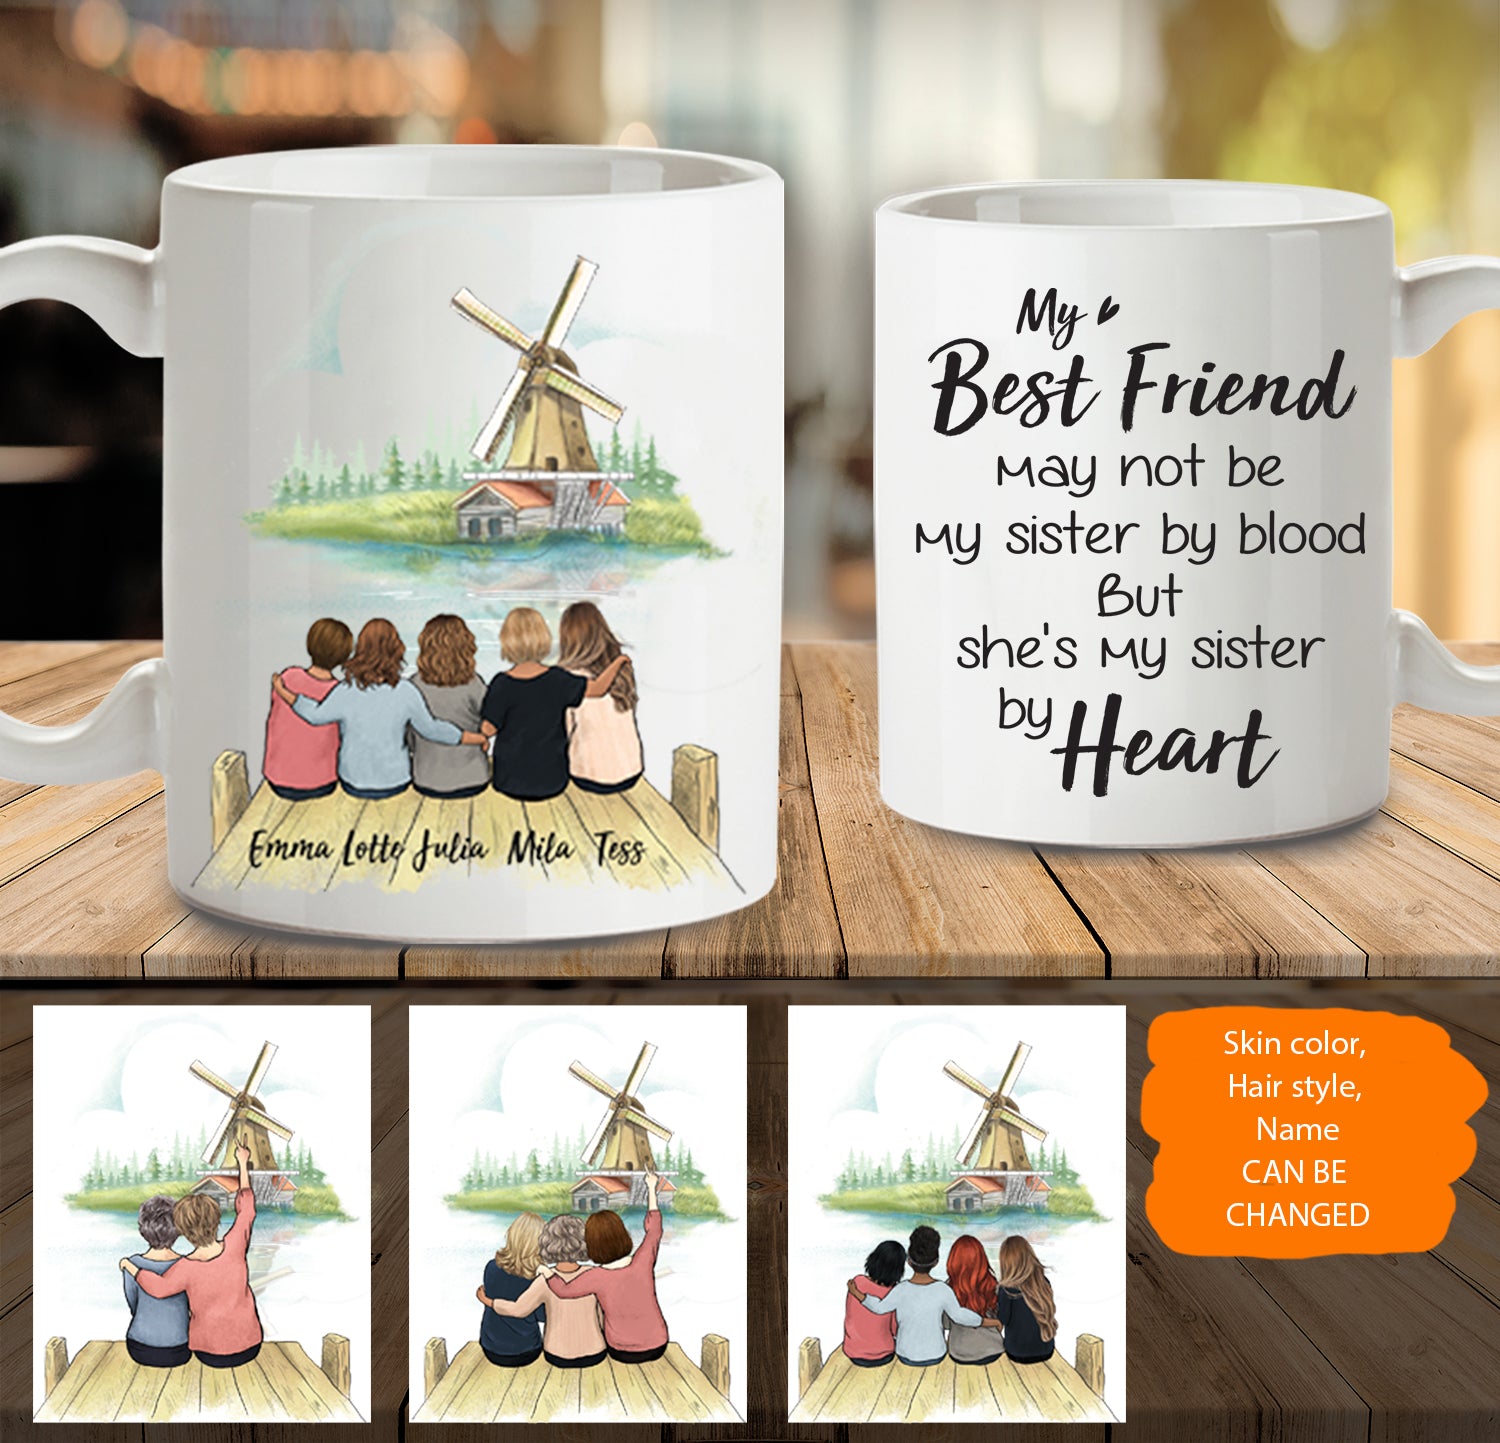 Personalized Coffee Mugs - Great Birthday Gift